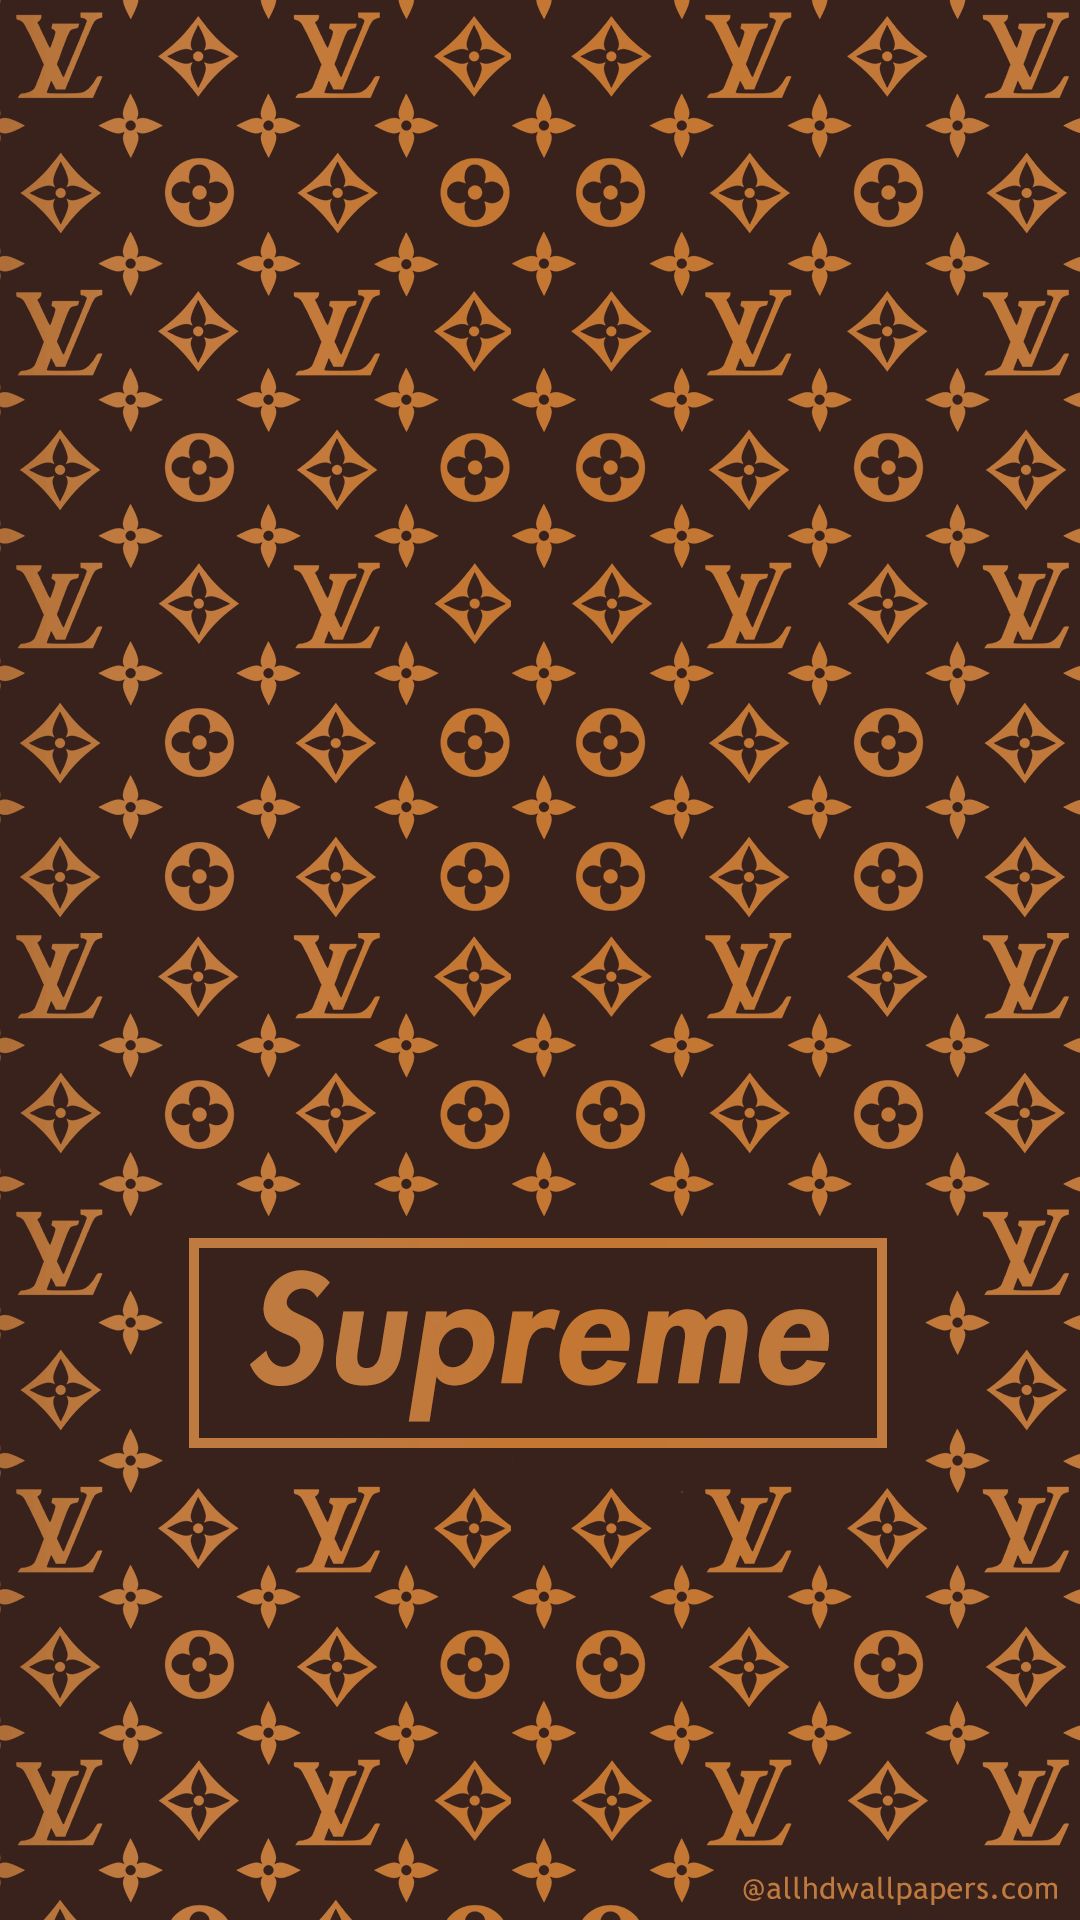 Supreme X ルイ ヴィトン ブランドのスマホ壁紙 Iphone11 スマホ